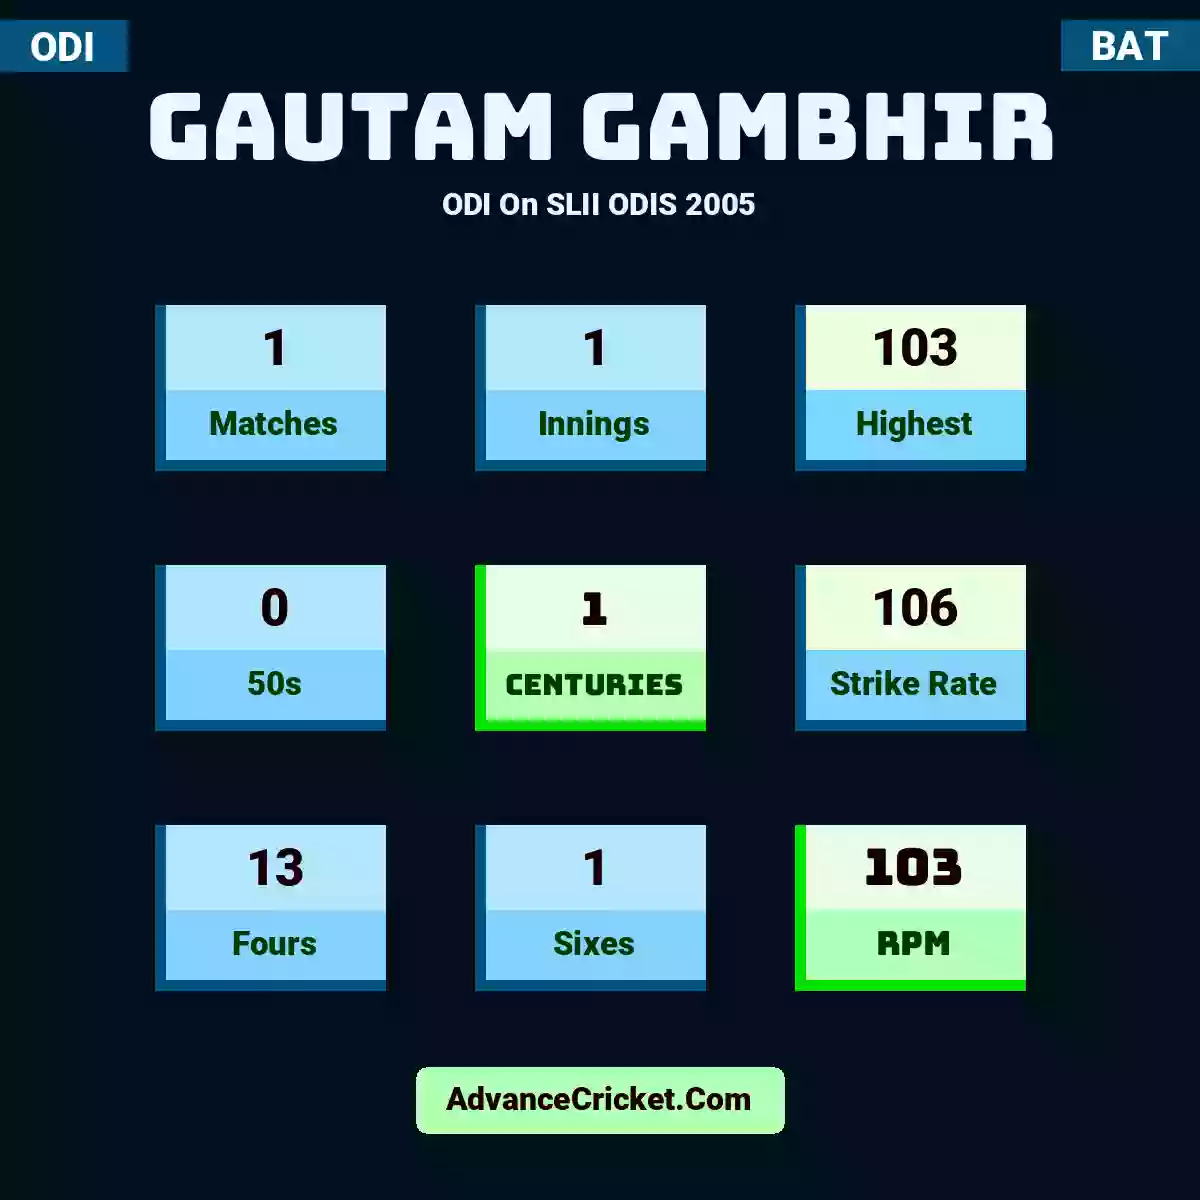 Gautam Gambhir ODI  On SLII ODIS 2005, Gautam Gambhir played 1 matches, scored 103 runs as highest, 0 half-centuries, and 1 centuries, with a strike rate of 106. G.Gambhir hit 13 fours and 1 sixes, with an RPM of 103.